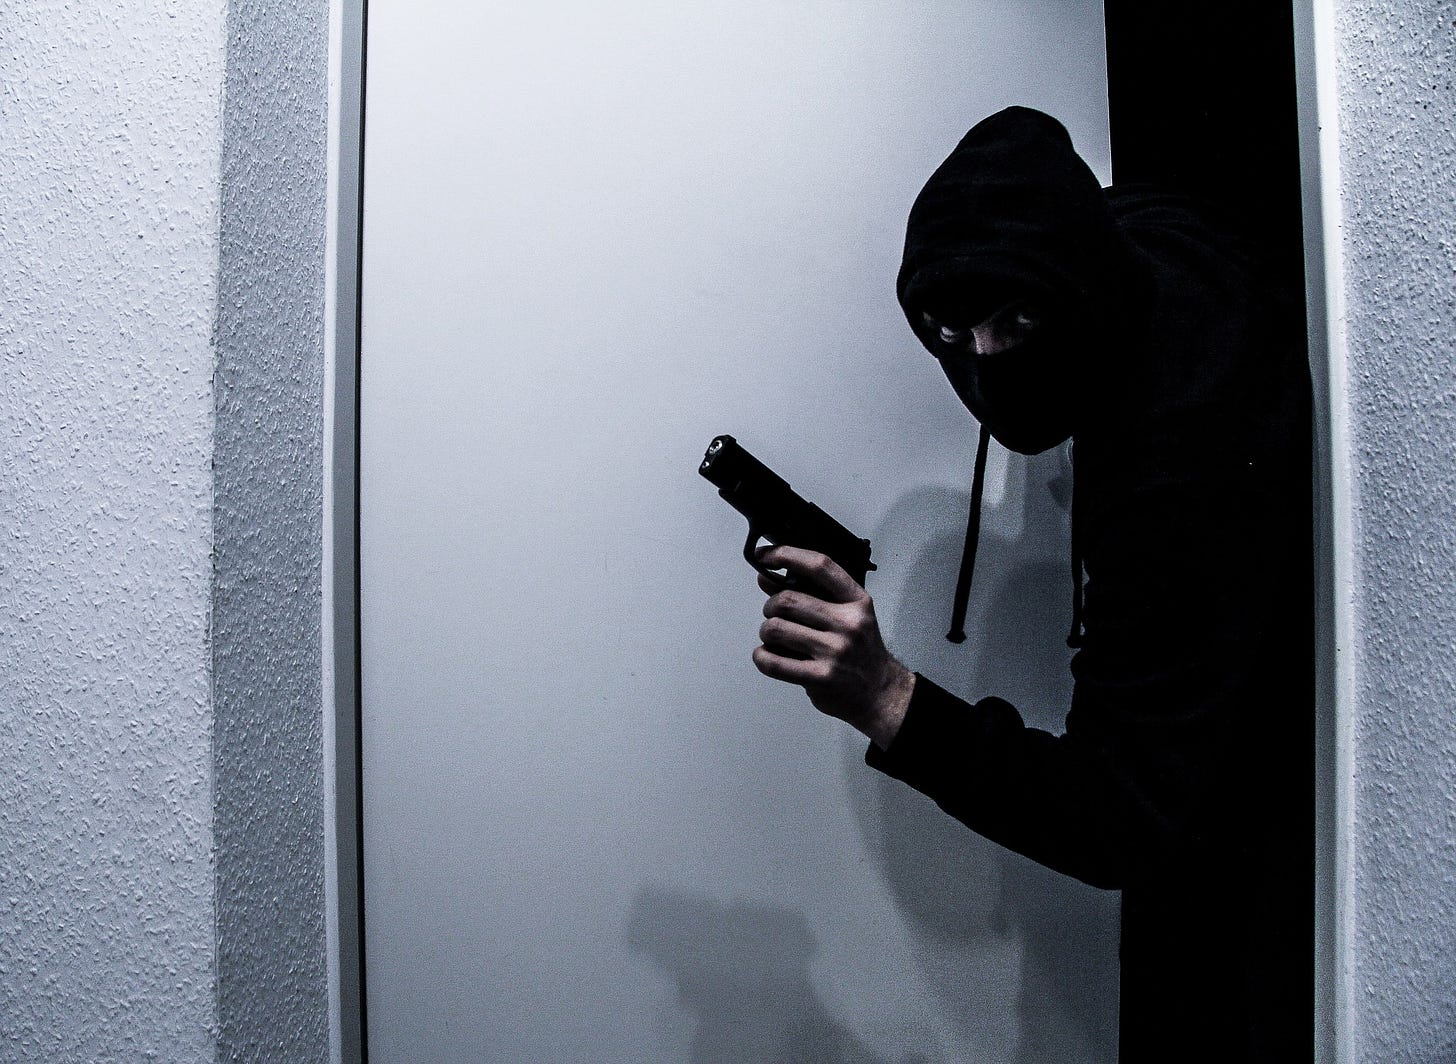 A burgler with a gun exits a doorway.